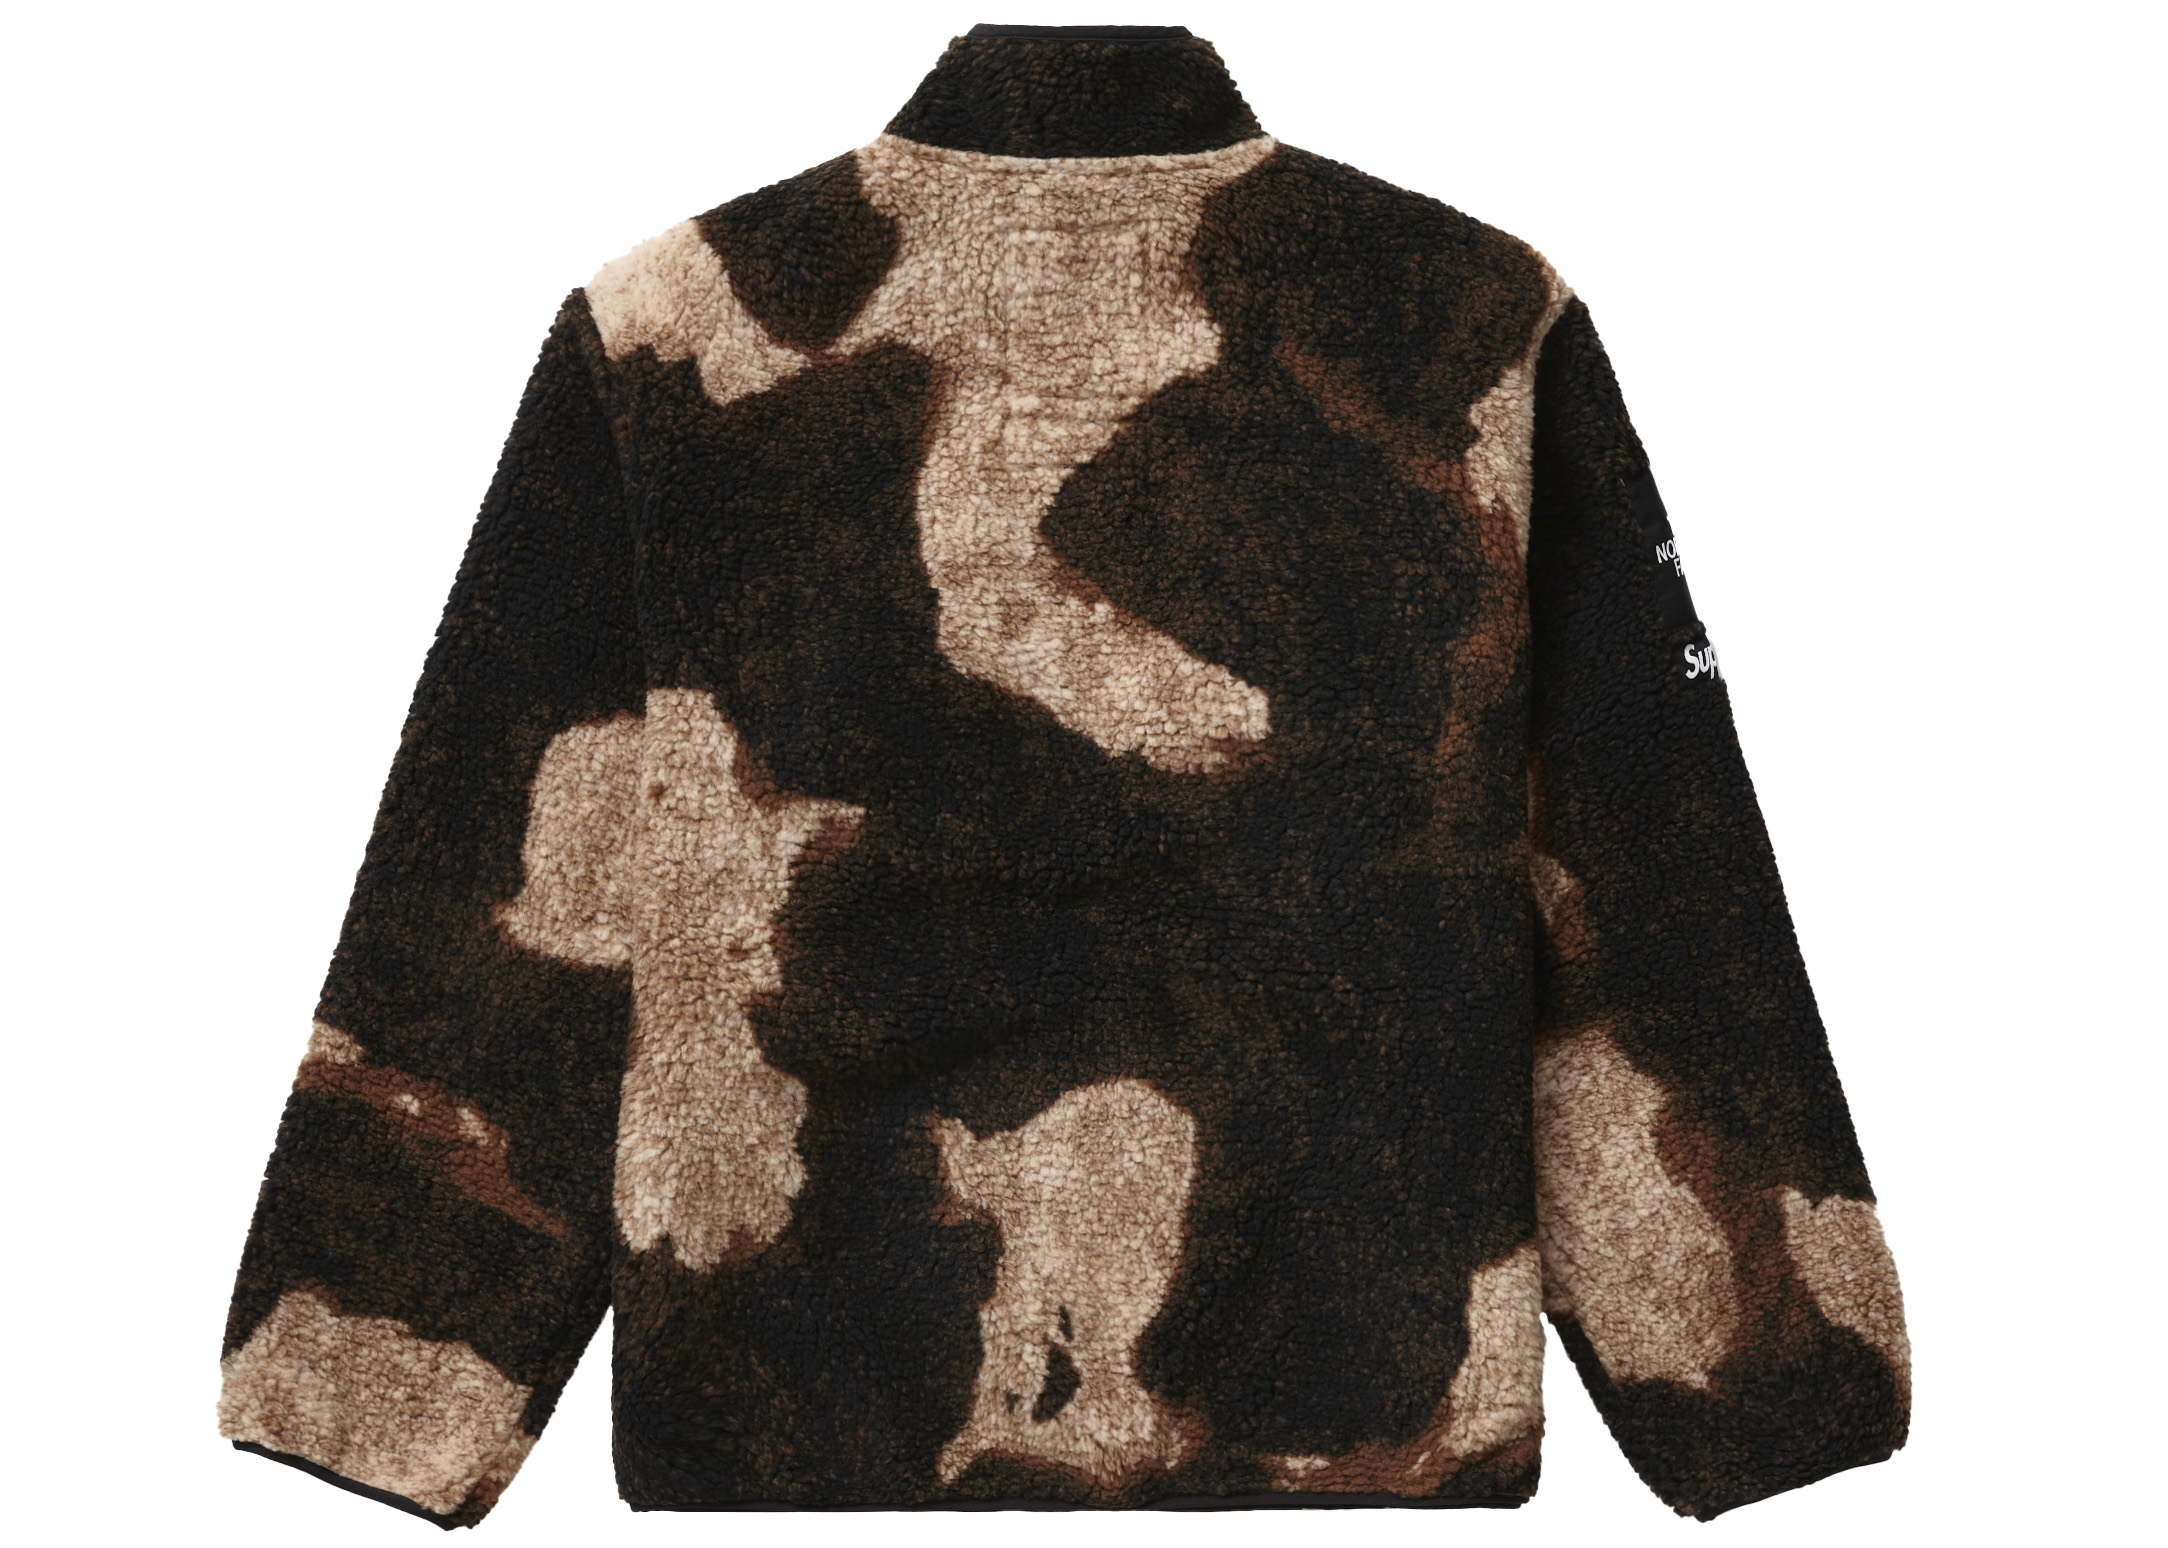 Supreme The North Face Bleached Denim Print Fleece Jacket Black